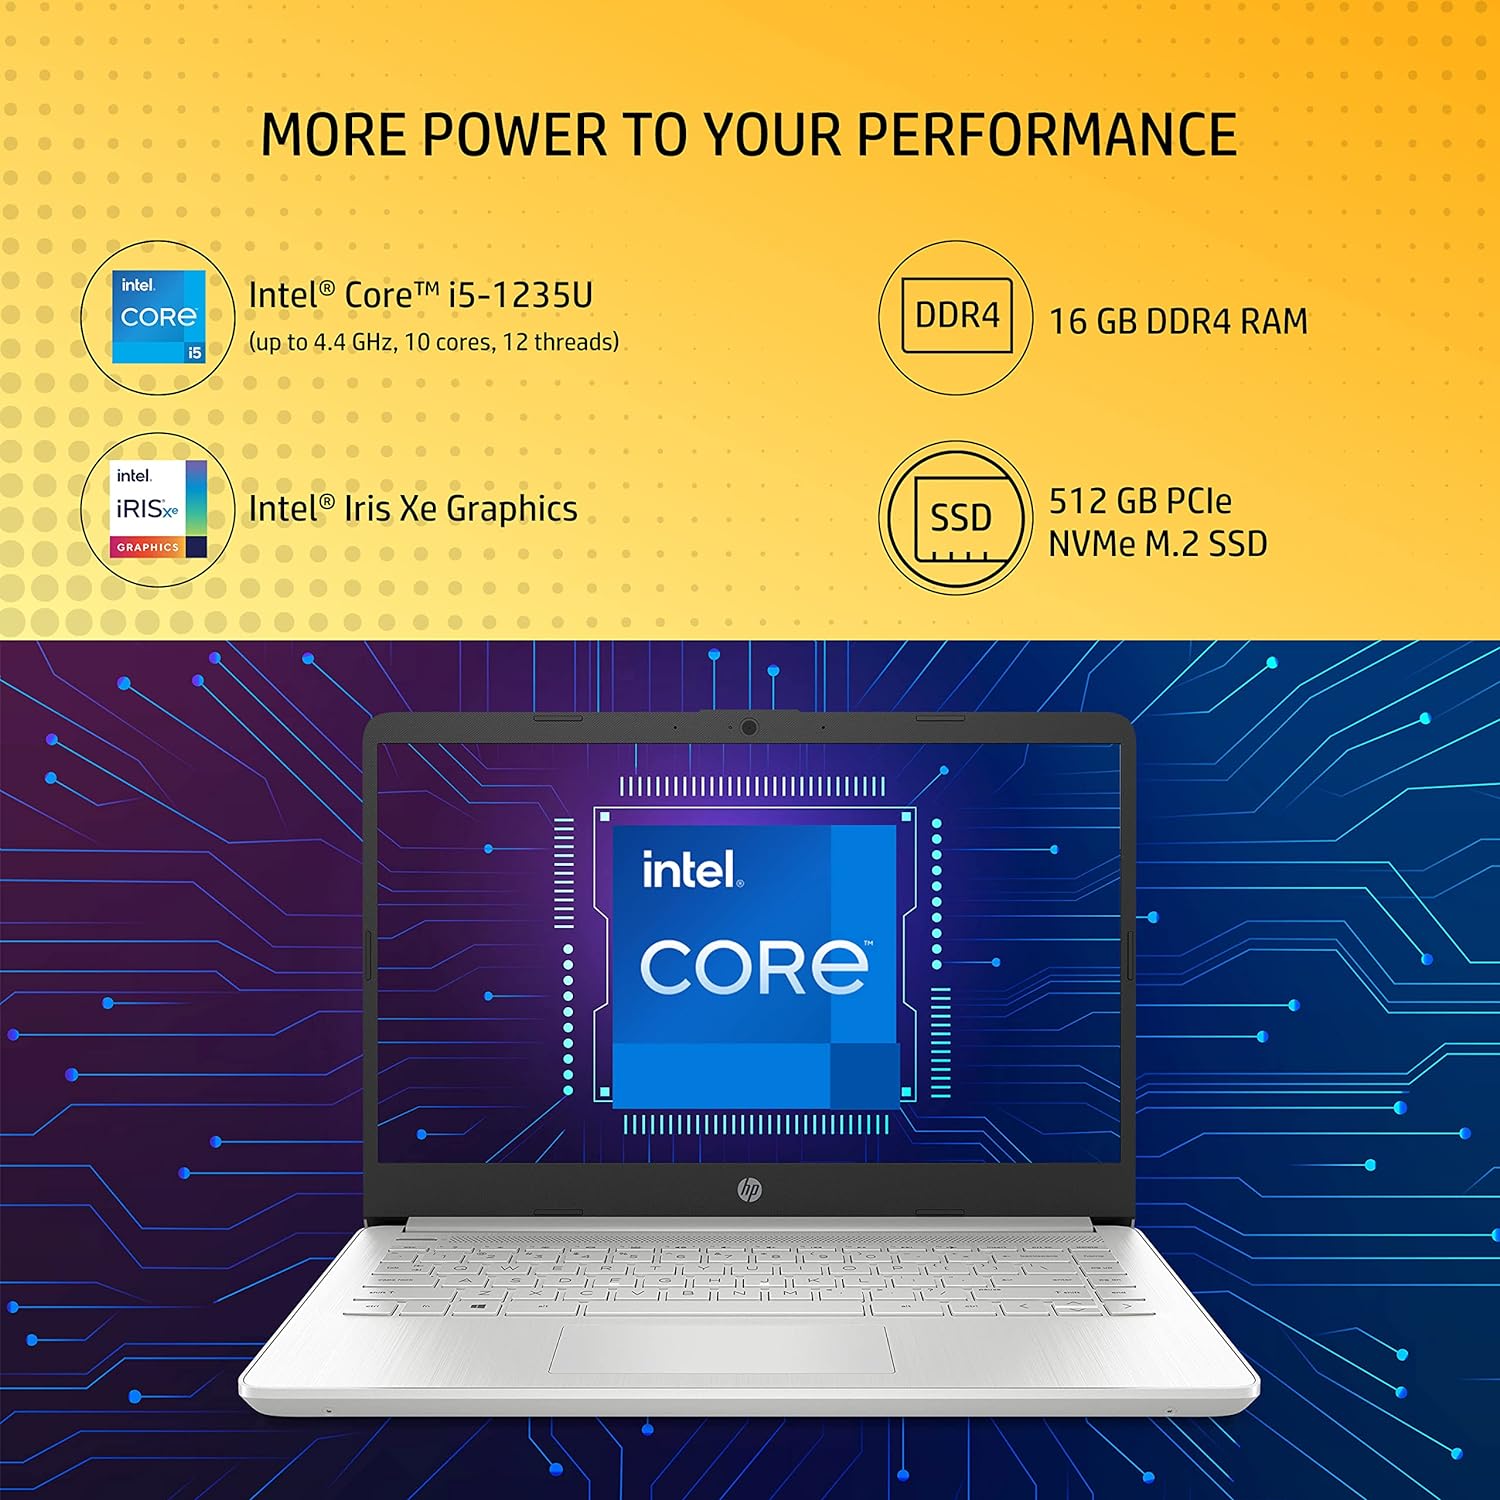 HP Sleek & Slim 14 Laptop Core i5 1135G7 Processor 16GB DDR4 RAM 512GB SSD Integrated Graphics Windows 11 With Office Pro English & Arabic Keyboard